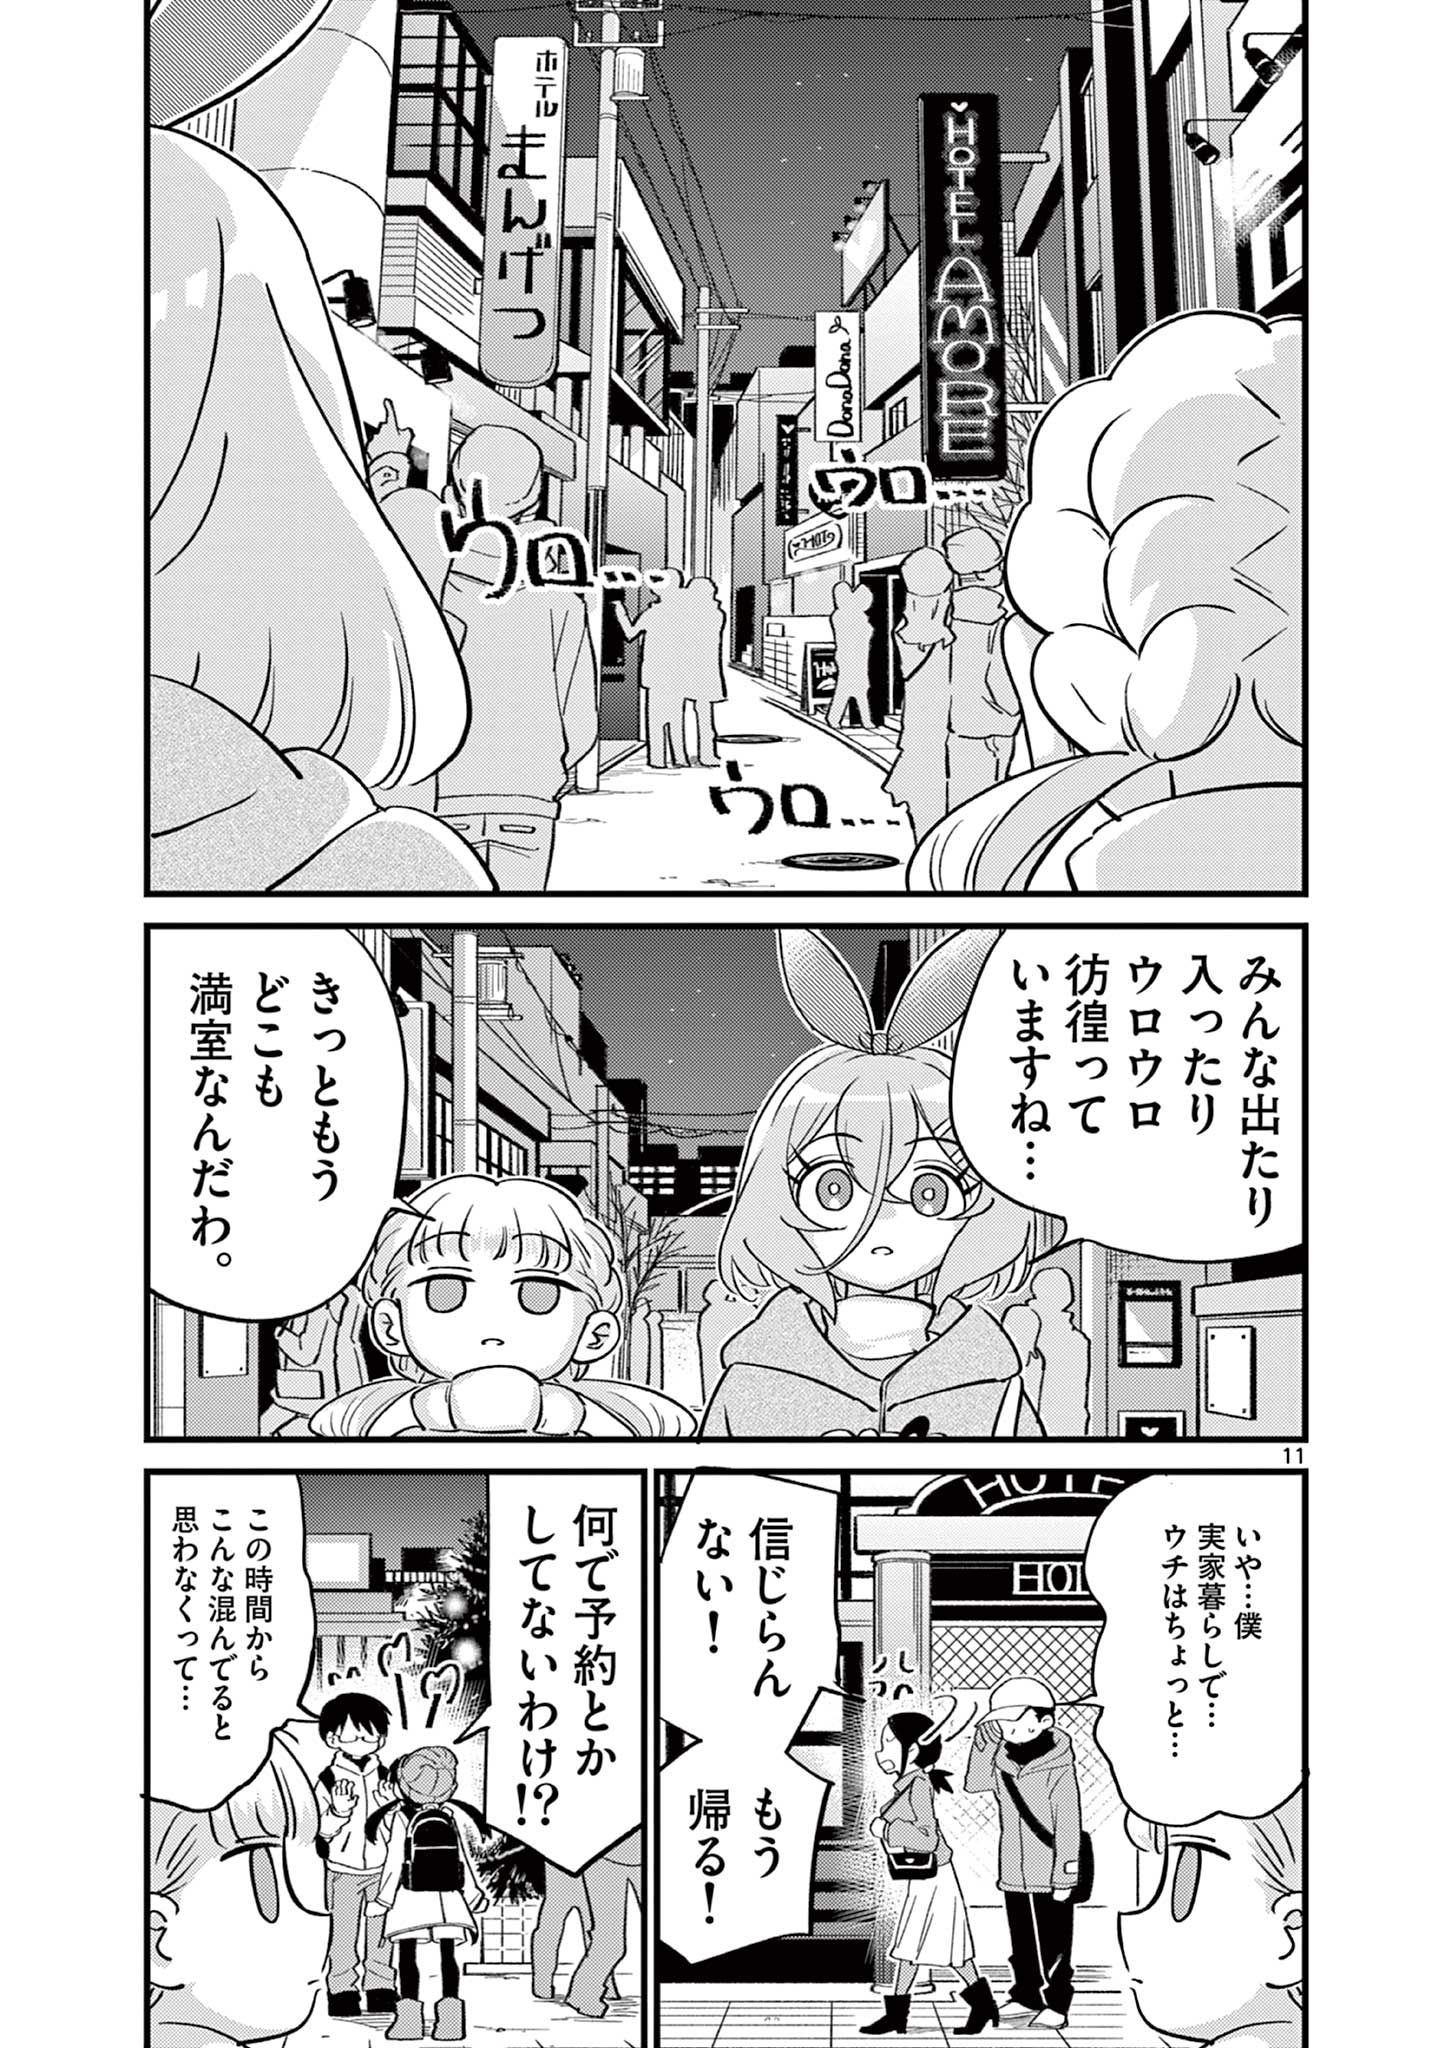 Ranka-chan wa Bitch ni Naritai - Chapter 16 - Page 11